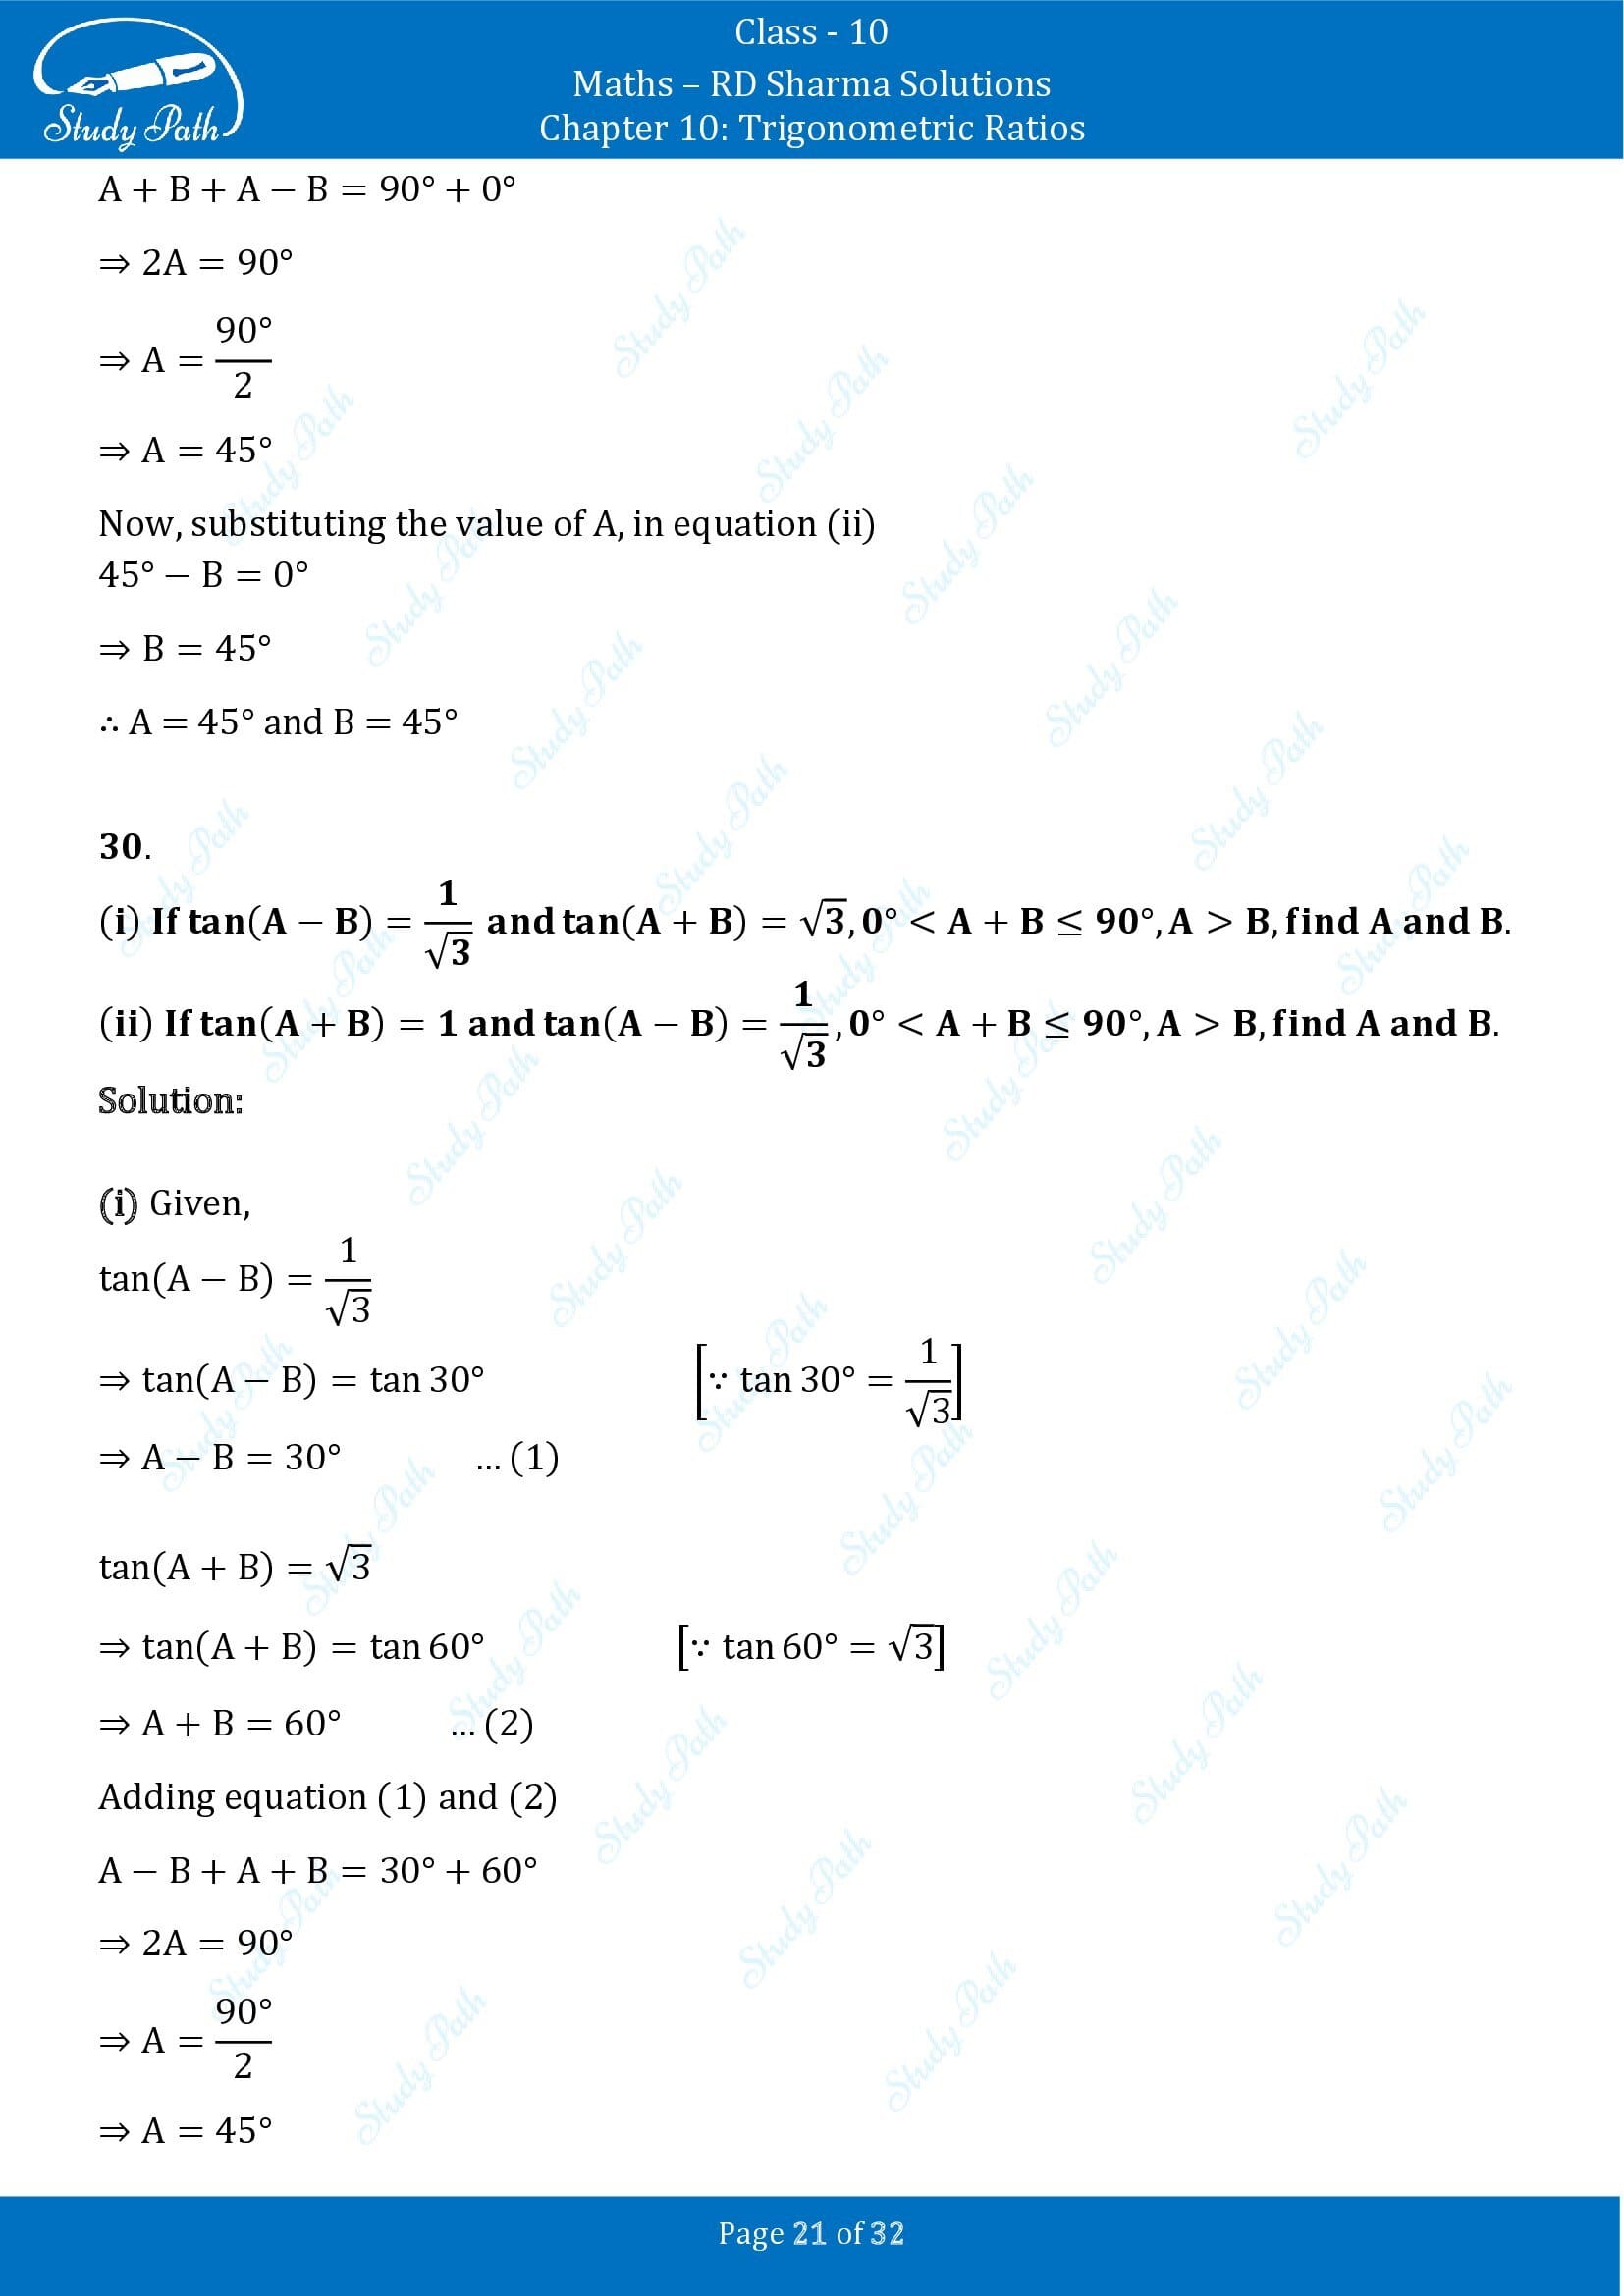 RD Sharma Solutions Class 10 Chapter 10 Trigonometric Ratios Exercise 10.2 00021